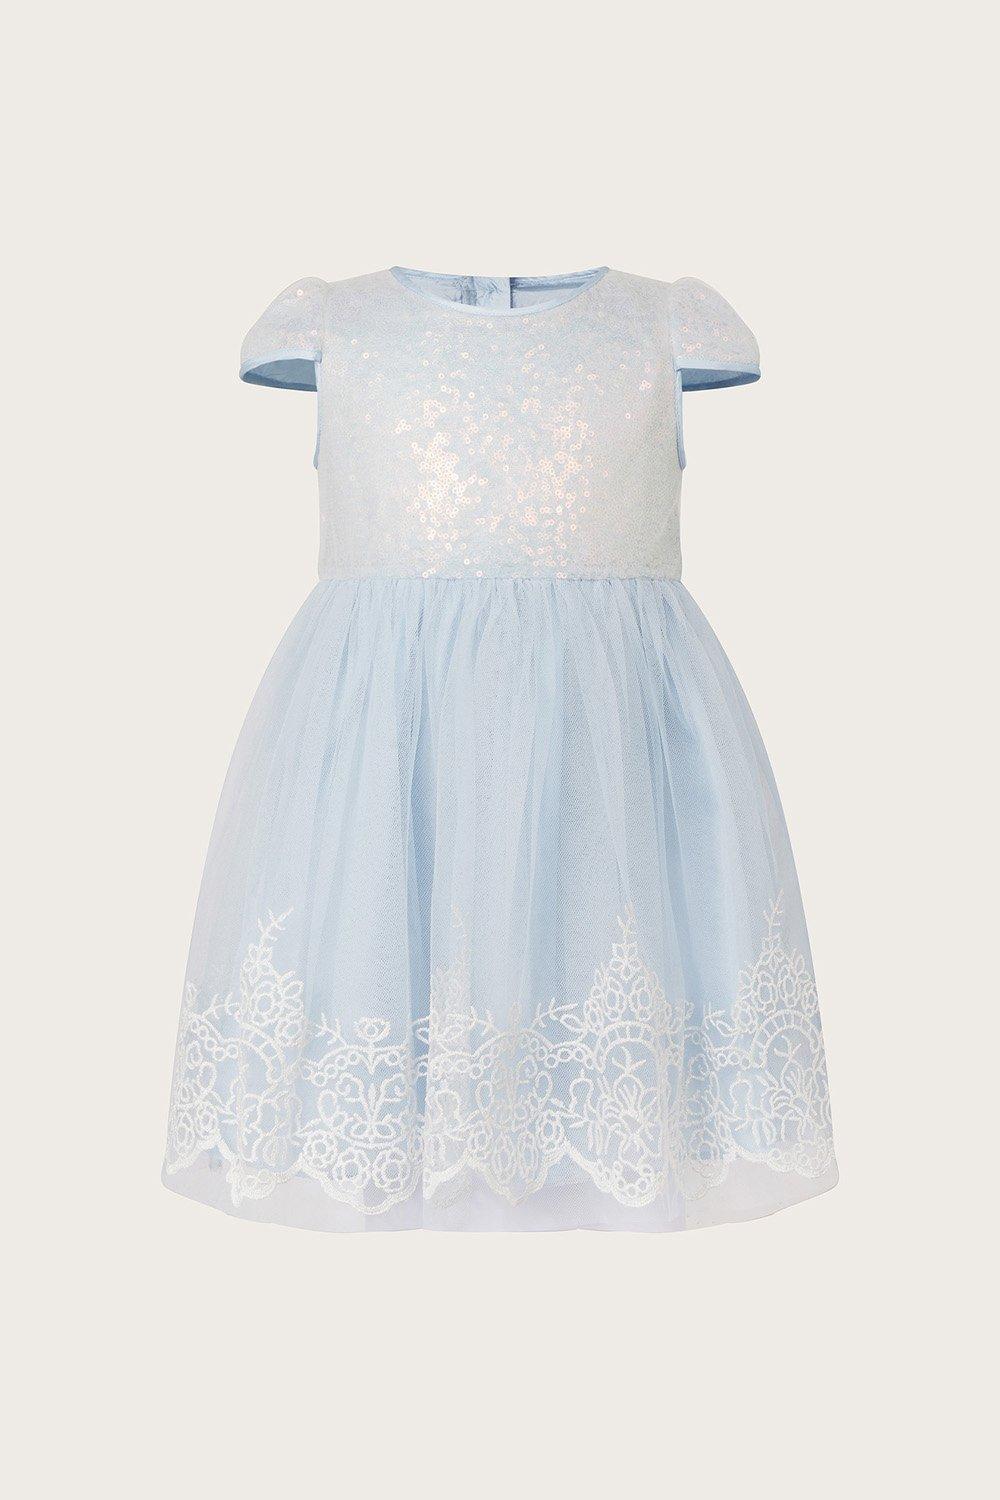 Monsoon Baby 'Annelise' Sequin Net Dress | Debenhams